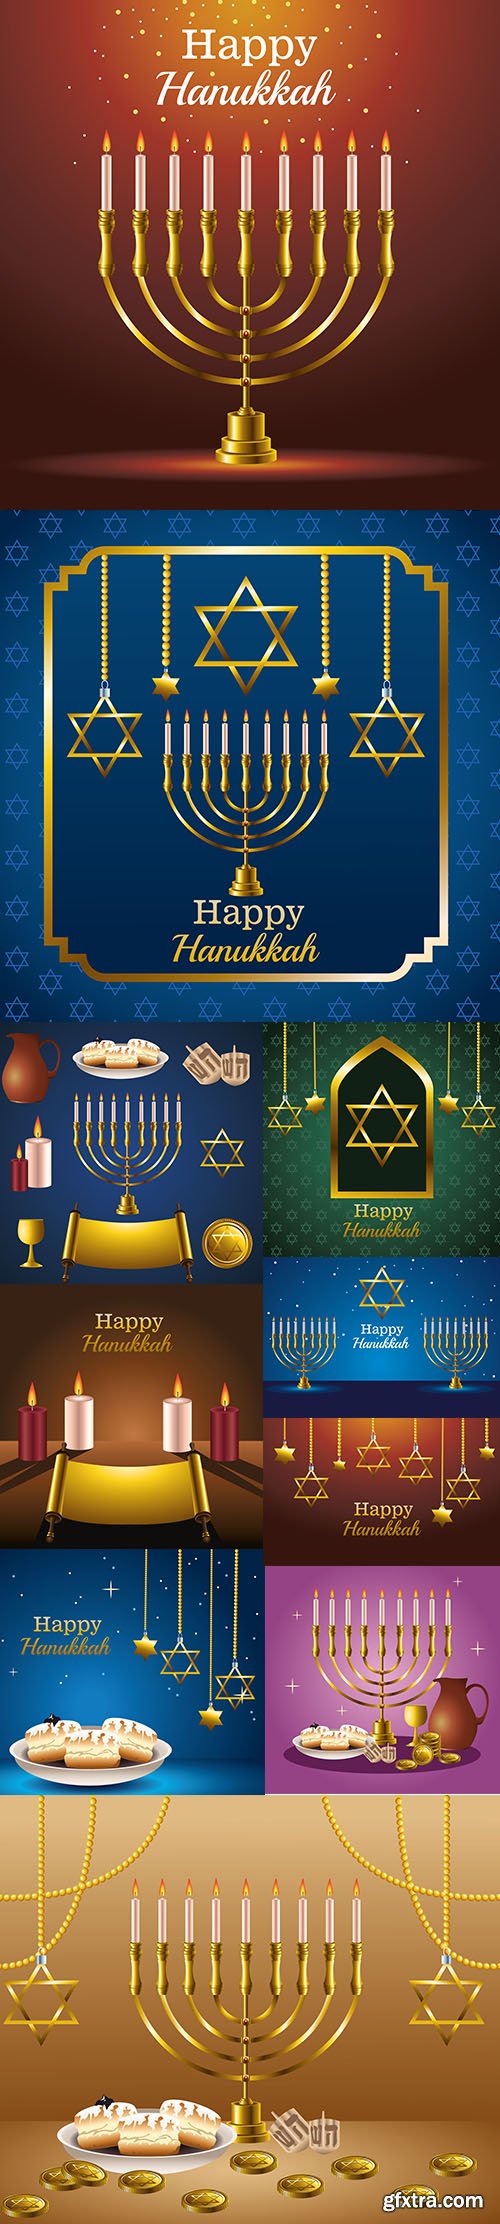 Happy hanukkah celebration card with golden stars hanging vector illustration